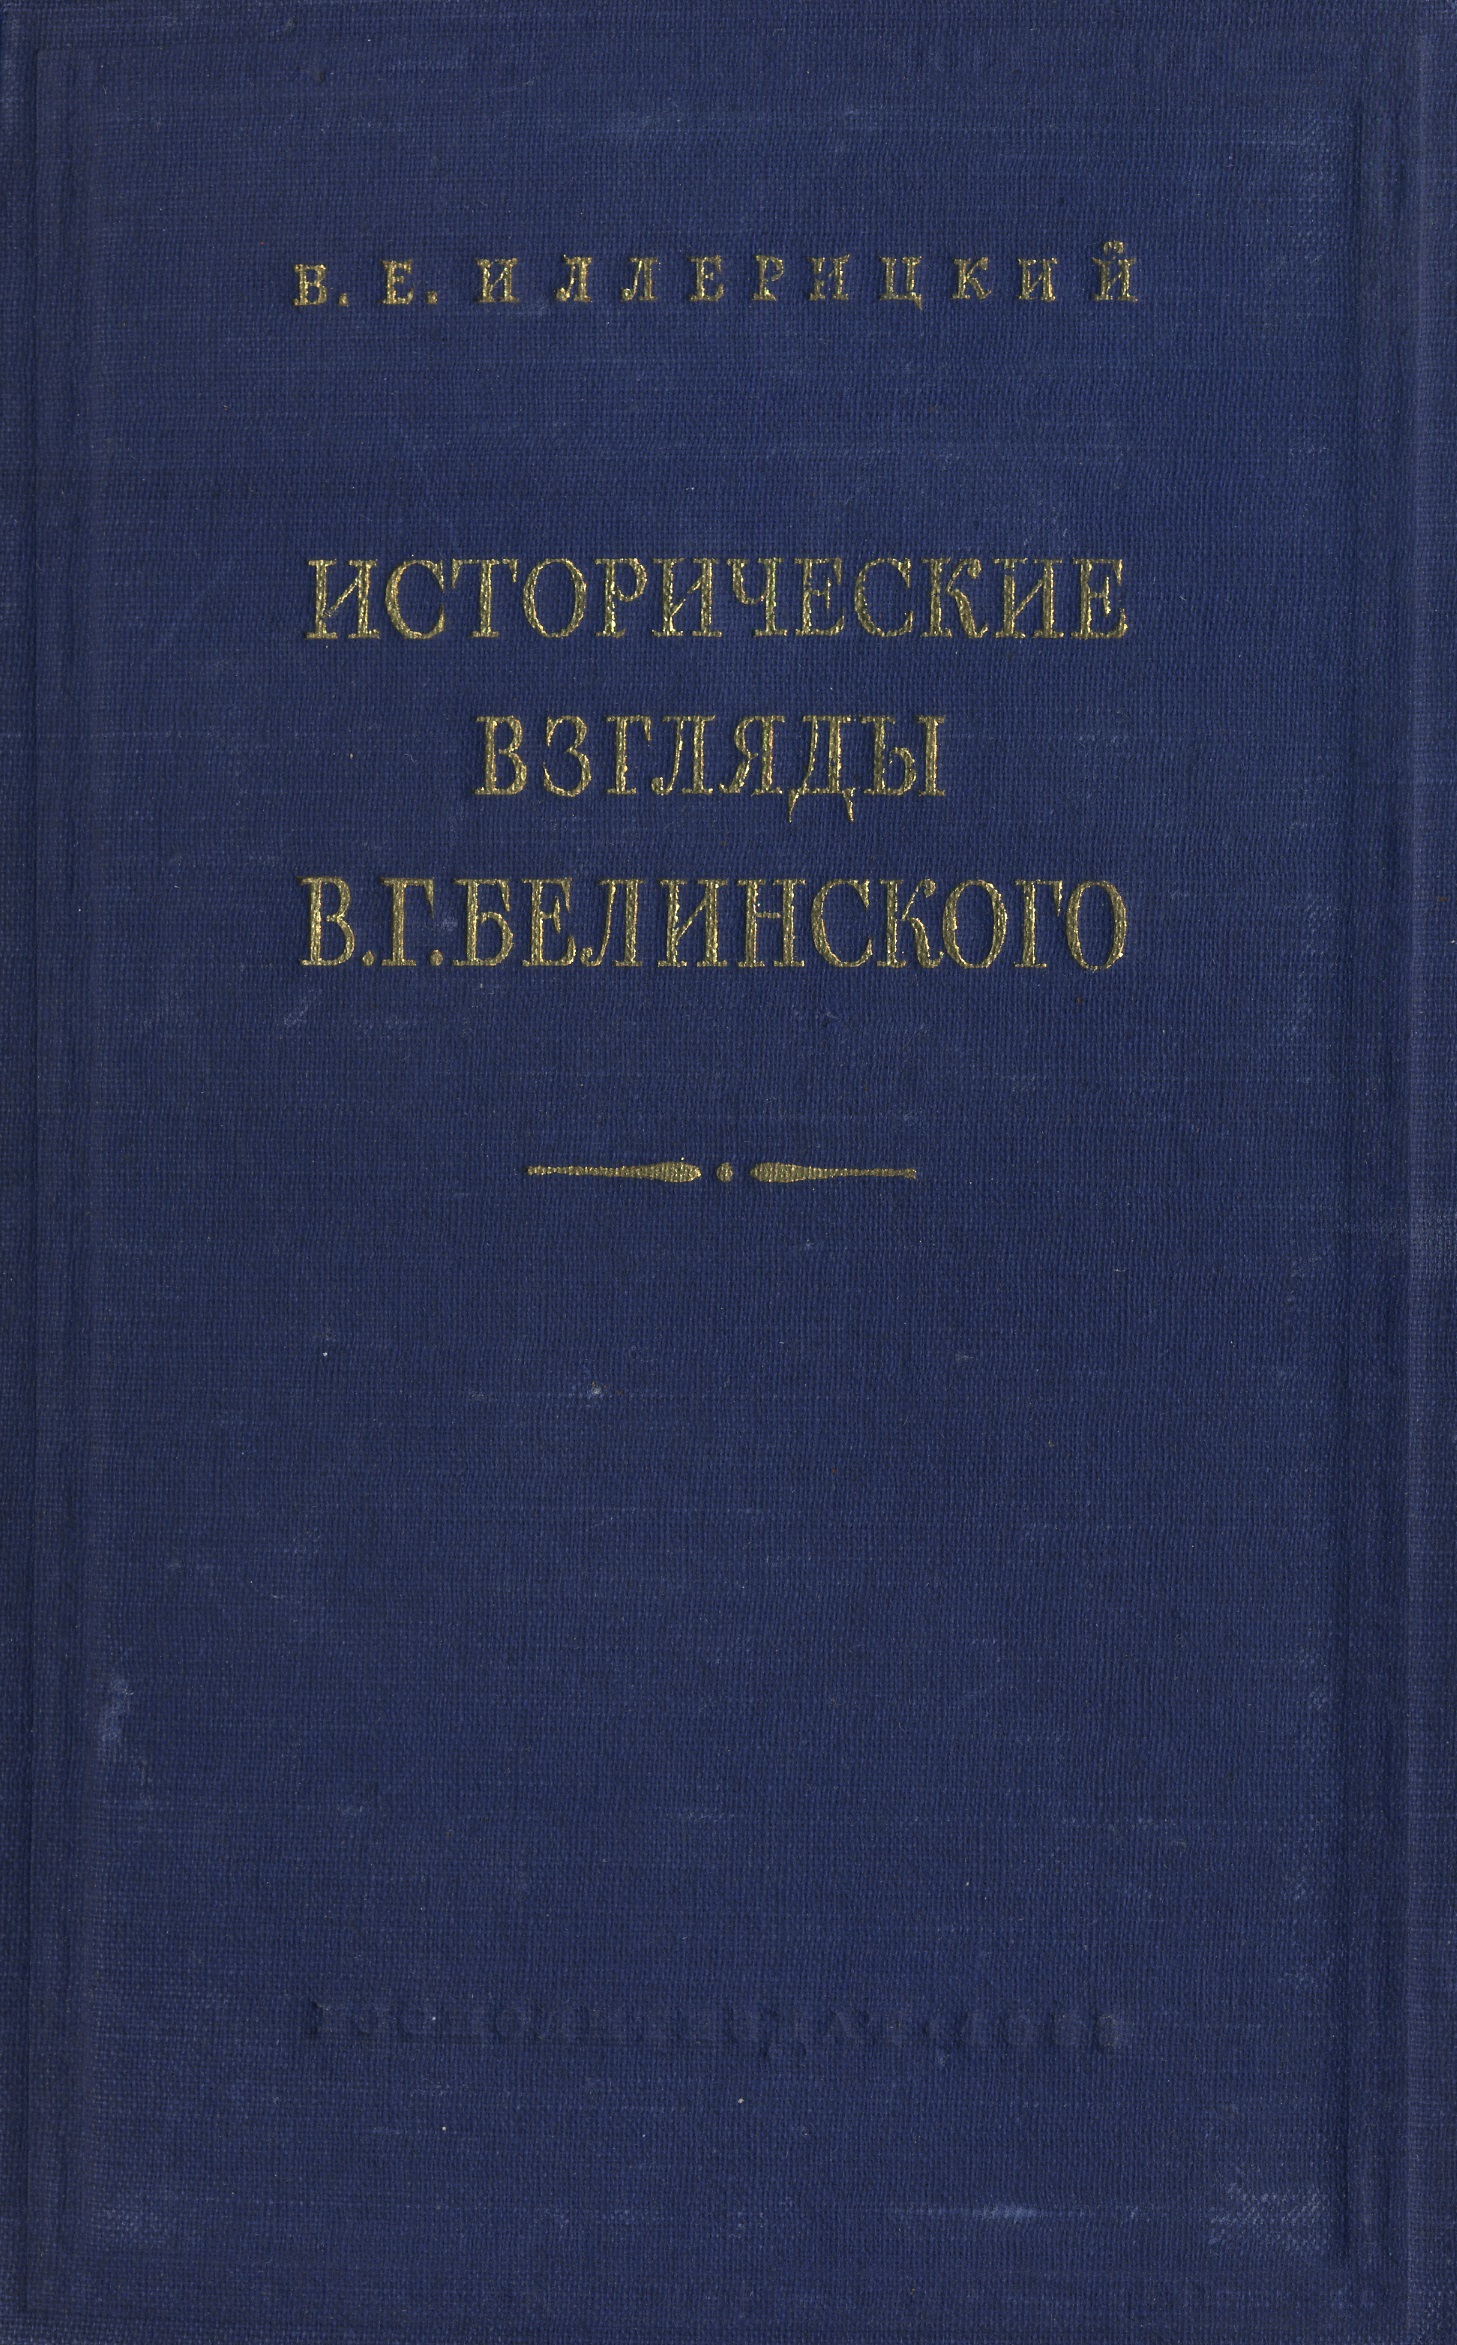 Historical views of Vissarion Belinsky - , Revolutionaries, Revolution, Socialism, , Books, Российская империя, Art, Longpost, Vissarion Belinsky